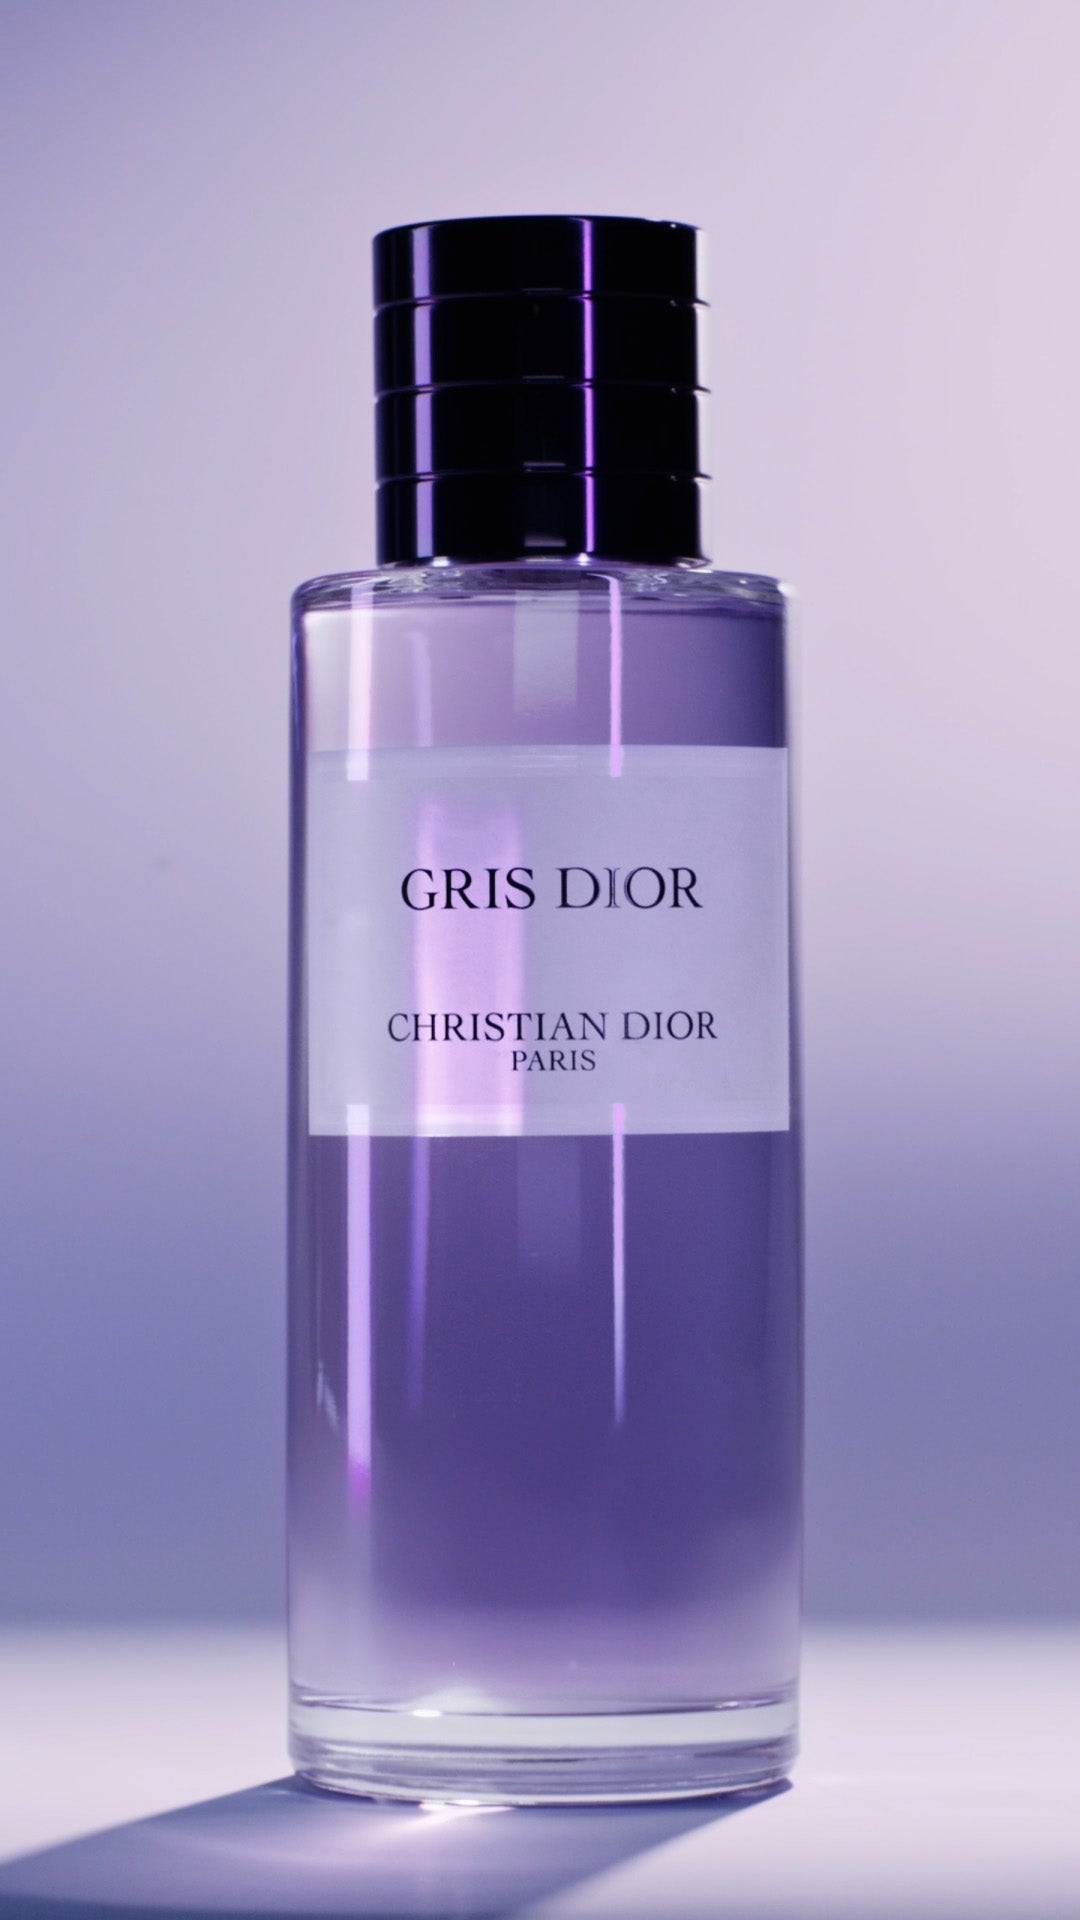 Gris Dior  Collection Privée Christian Dior  Fragrance  Dior Beauty HK